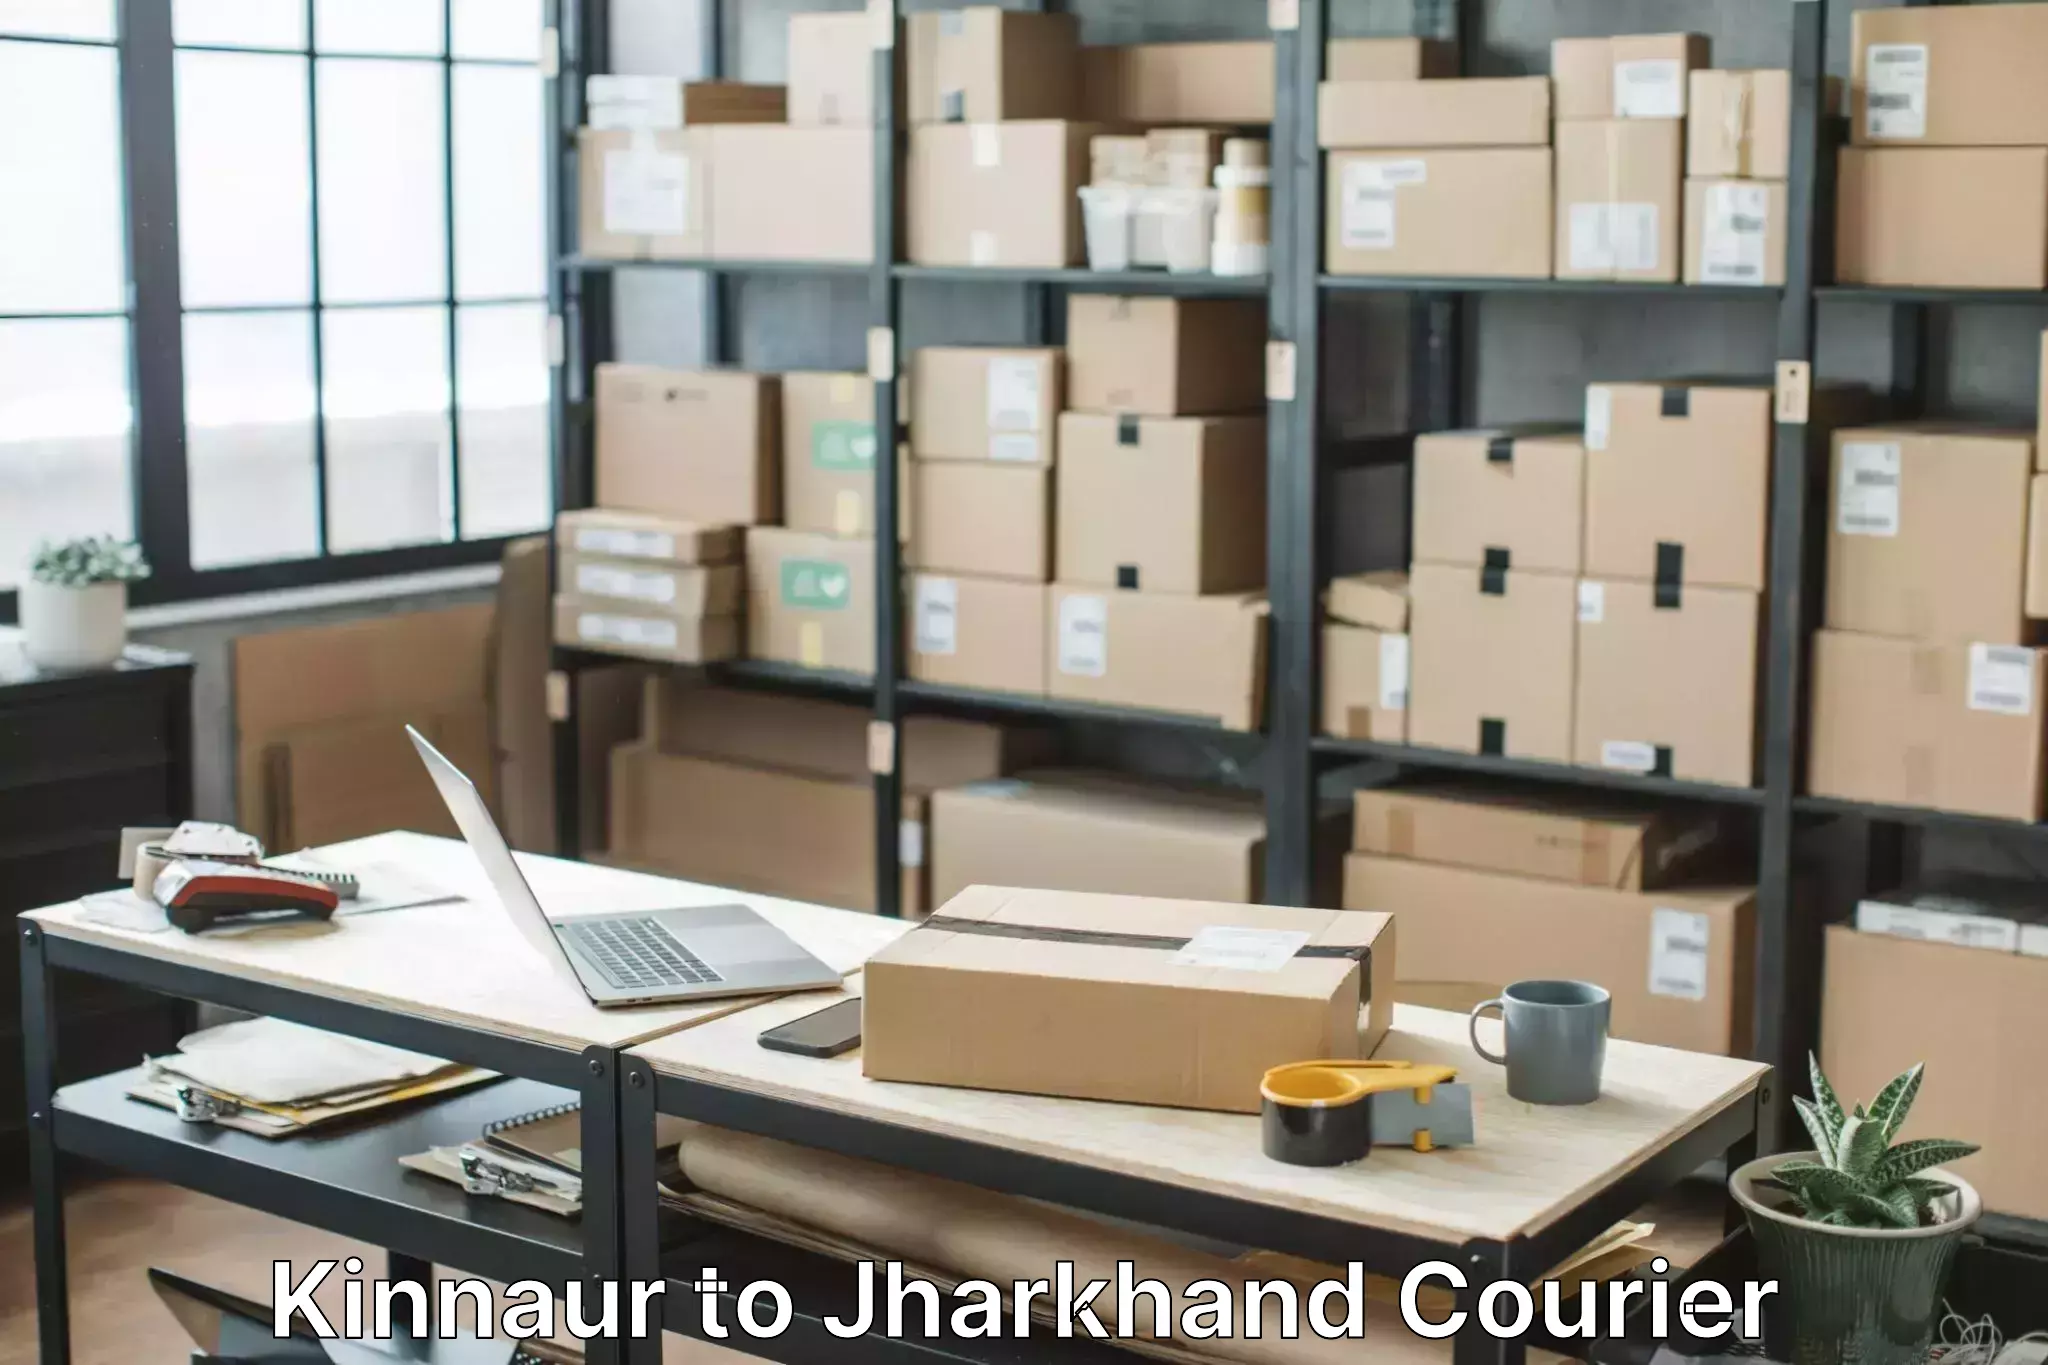 Professional moving company Kinnaur to IIIT Ranchi